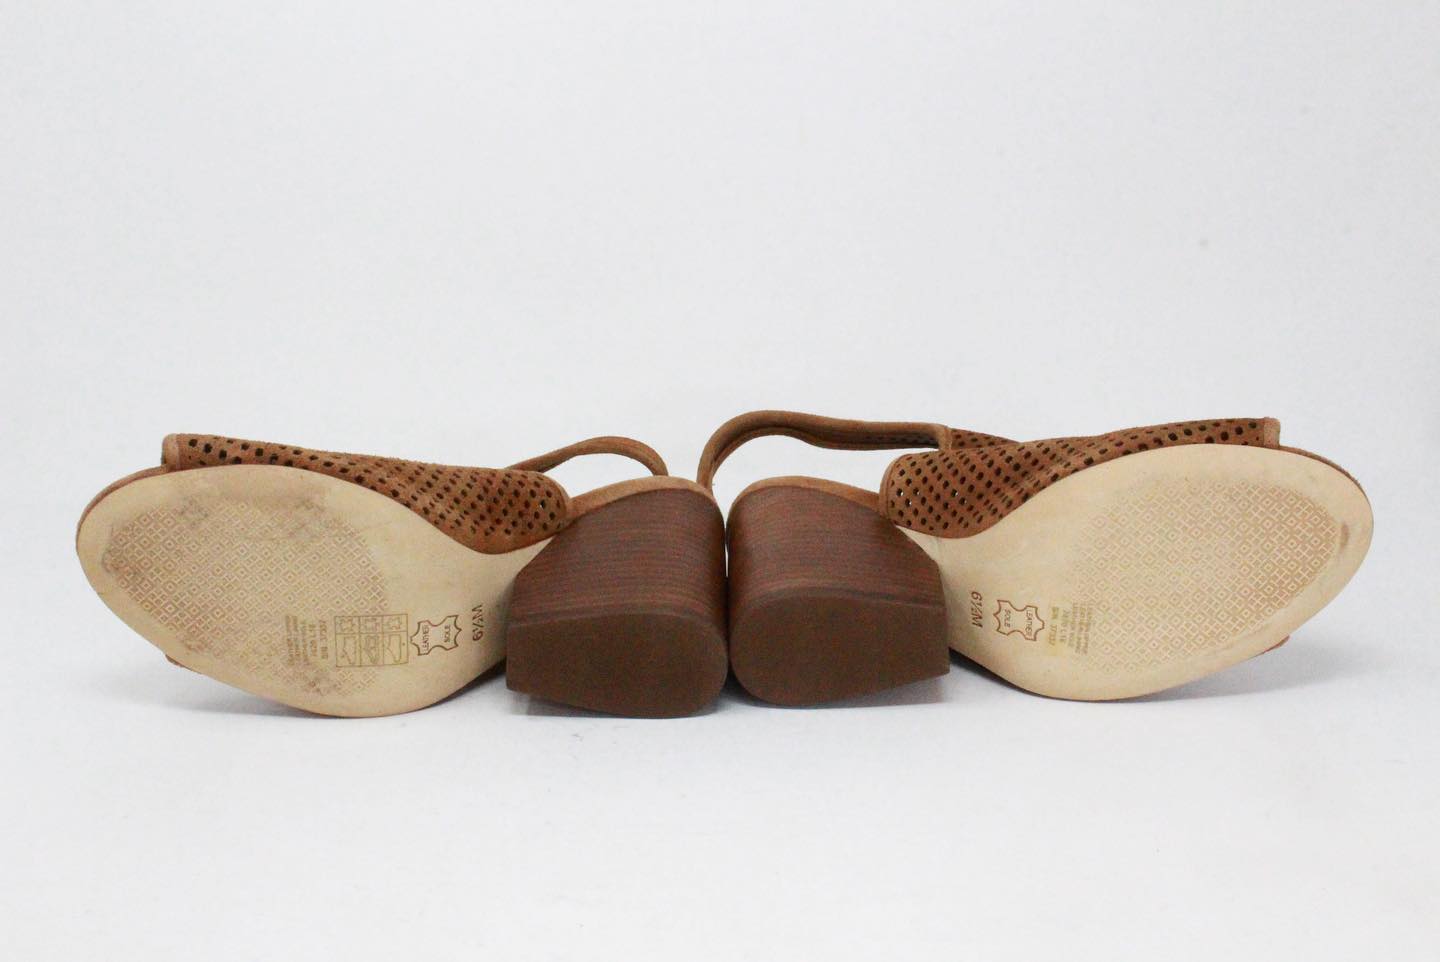 LOUIS VUITTON SANDALS Flat Slipper Ladies Size US6.5 EU36 Brown